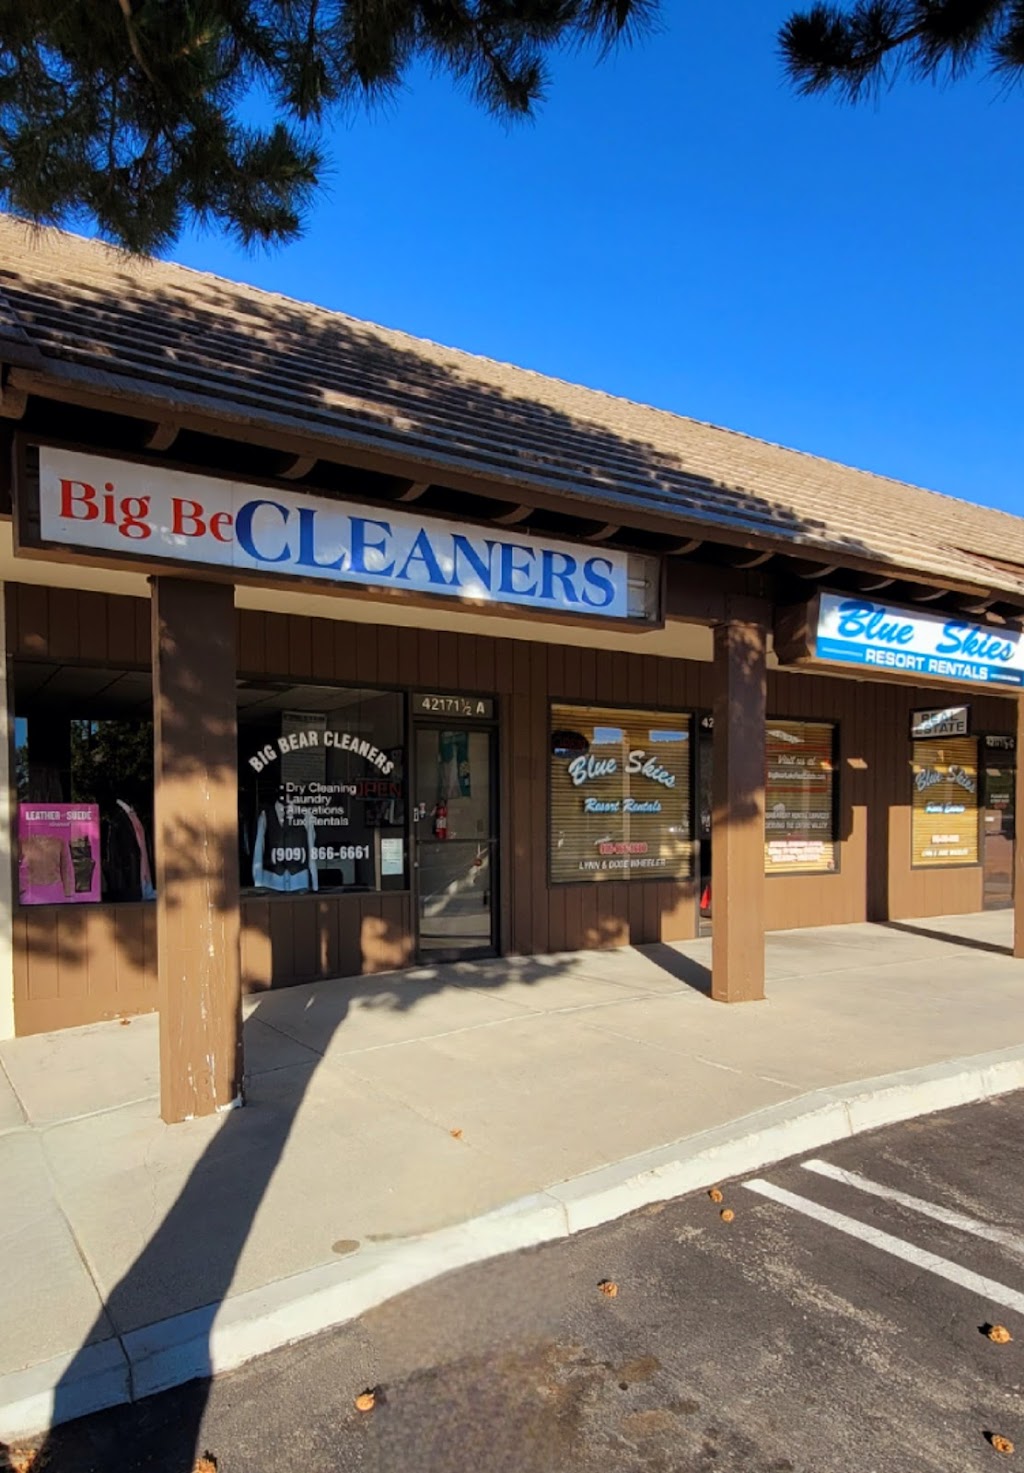 Big Bear Cleaners | 42171 1/2 A, Big Bear Blvd, Big Bear Lake, CA 92315, USA | Phone: (909) 866-6661